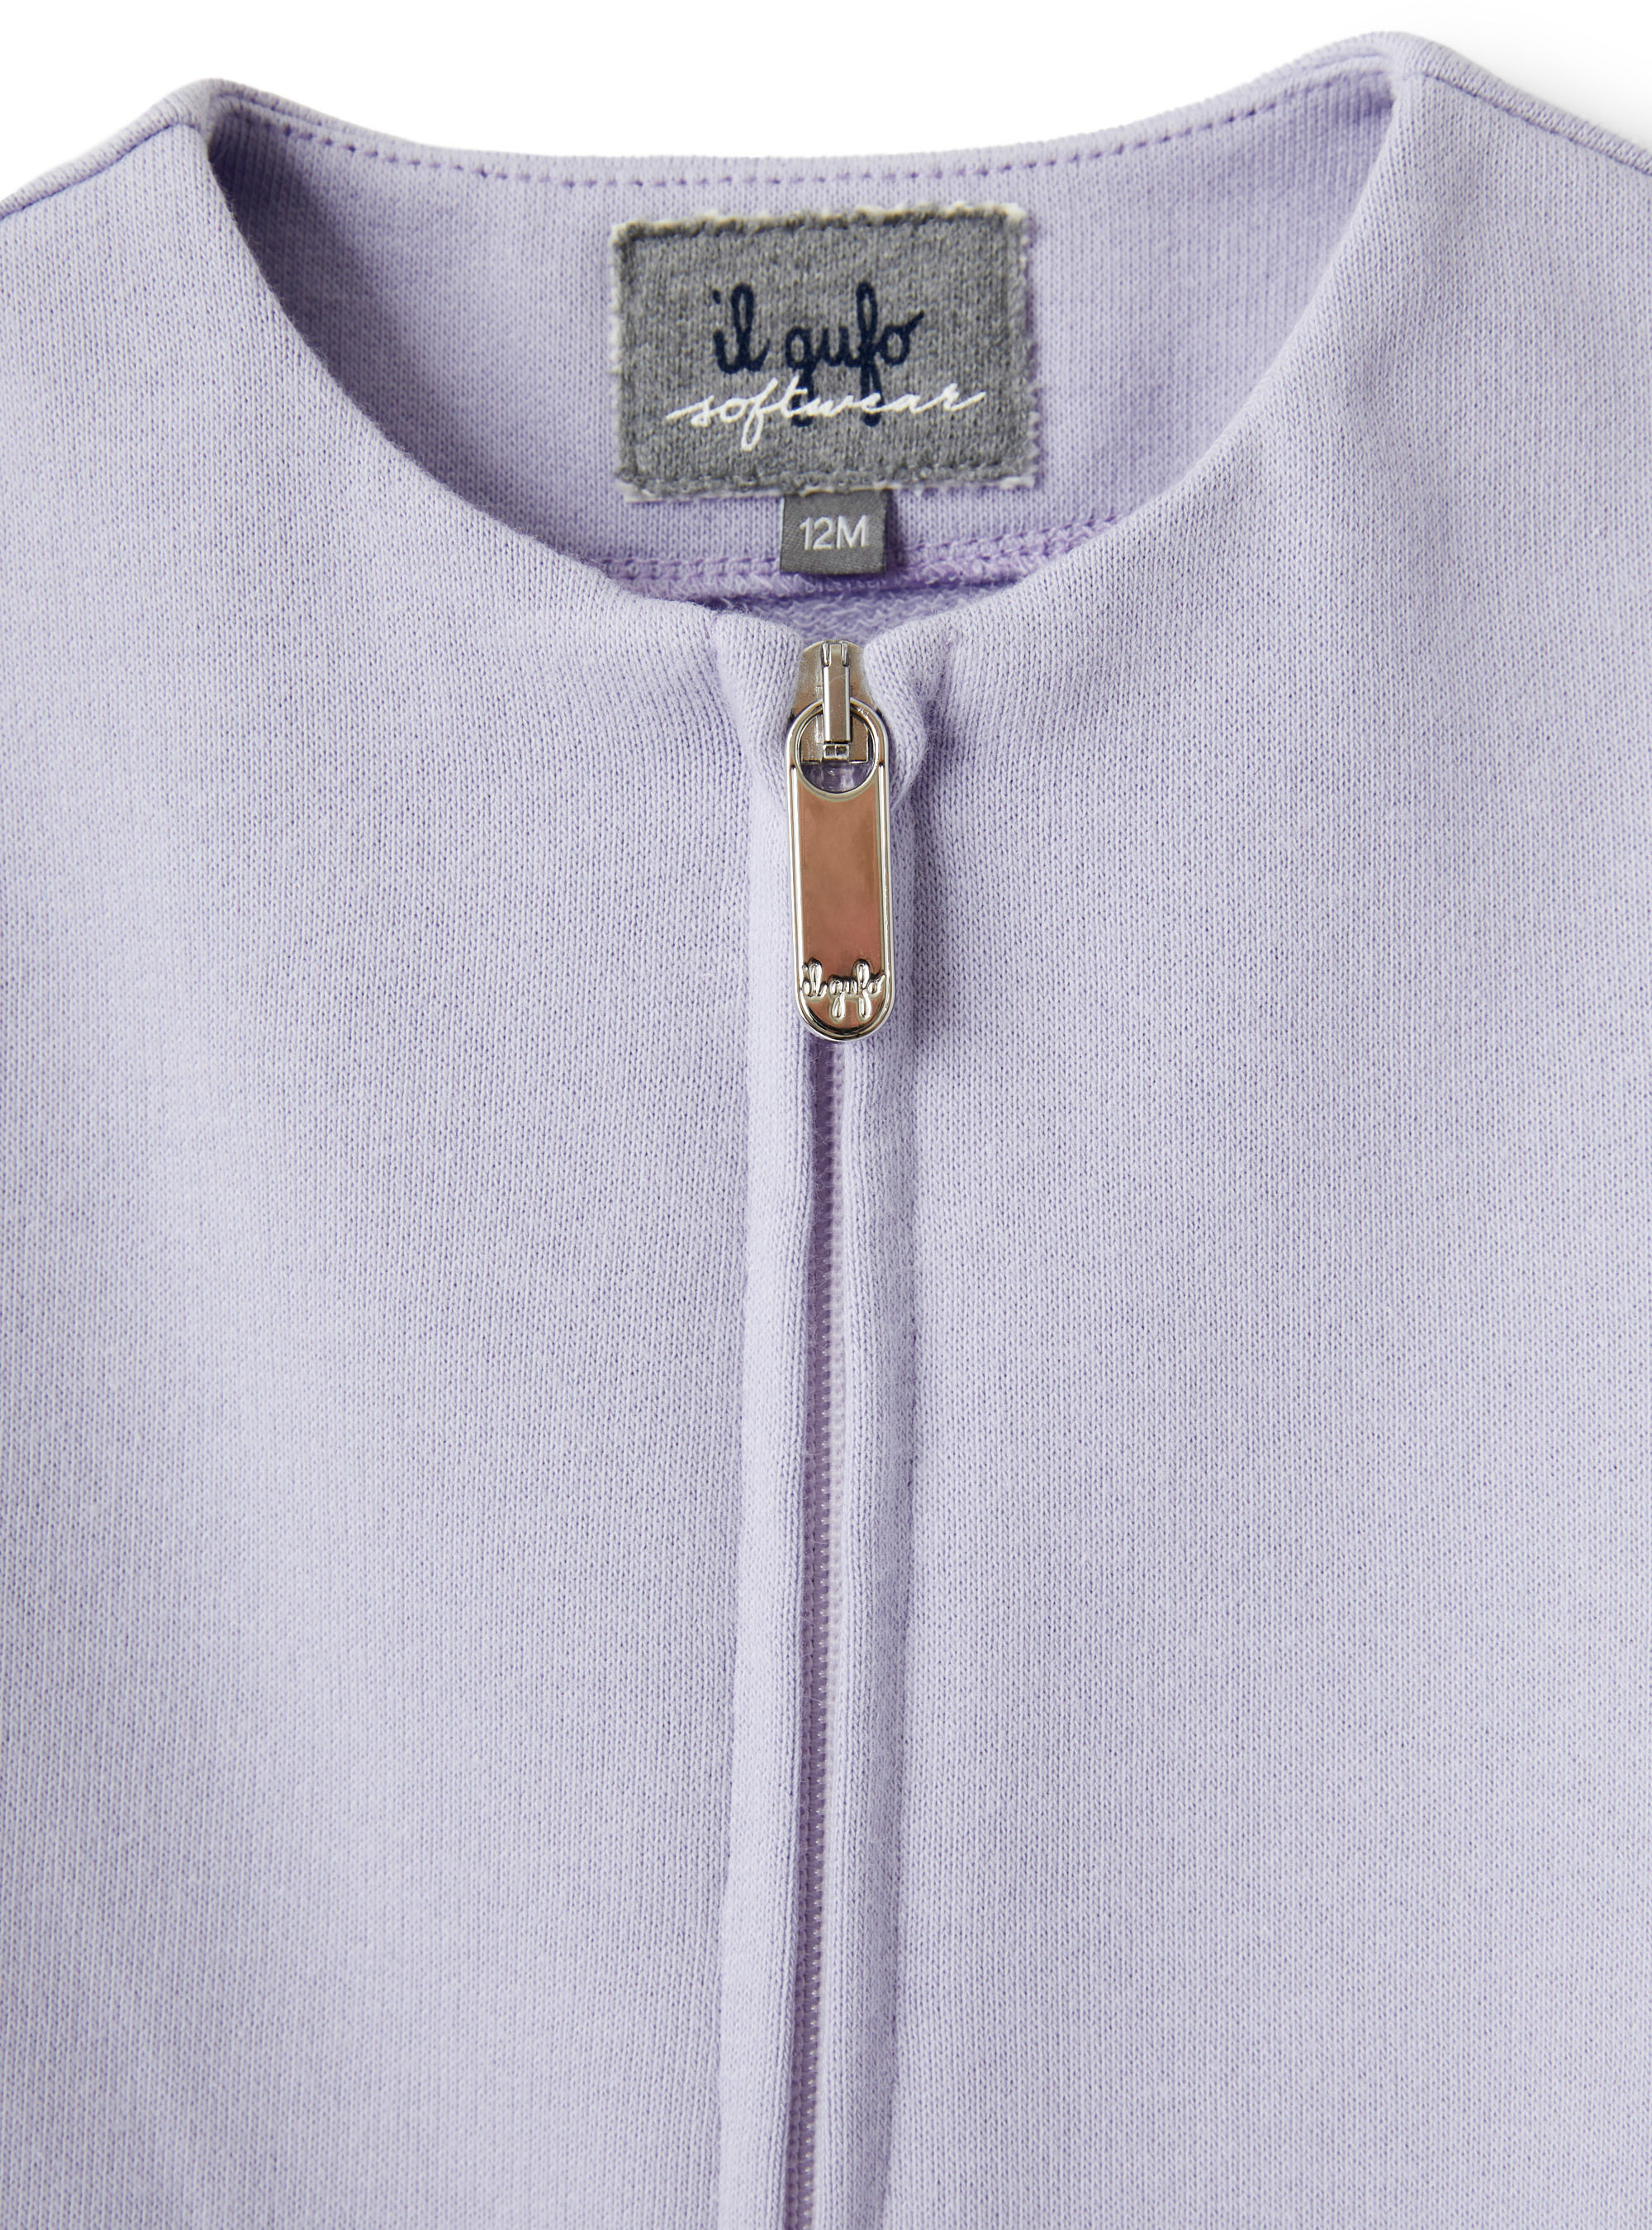 Sweatshirt with balloon sleeves - Lilac | Il Gufo